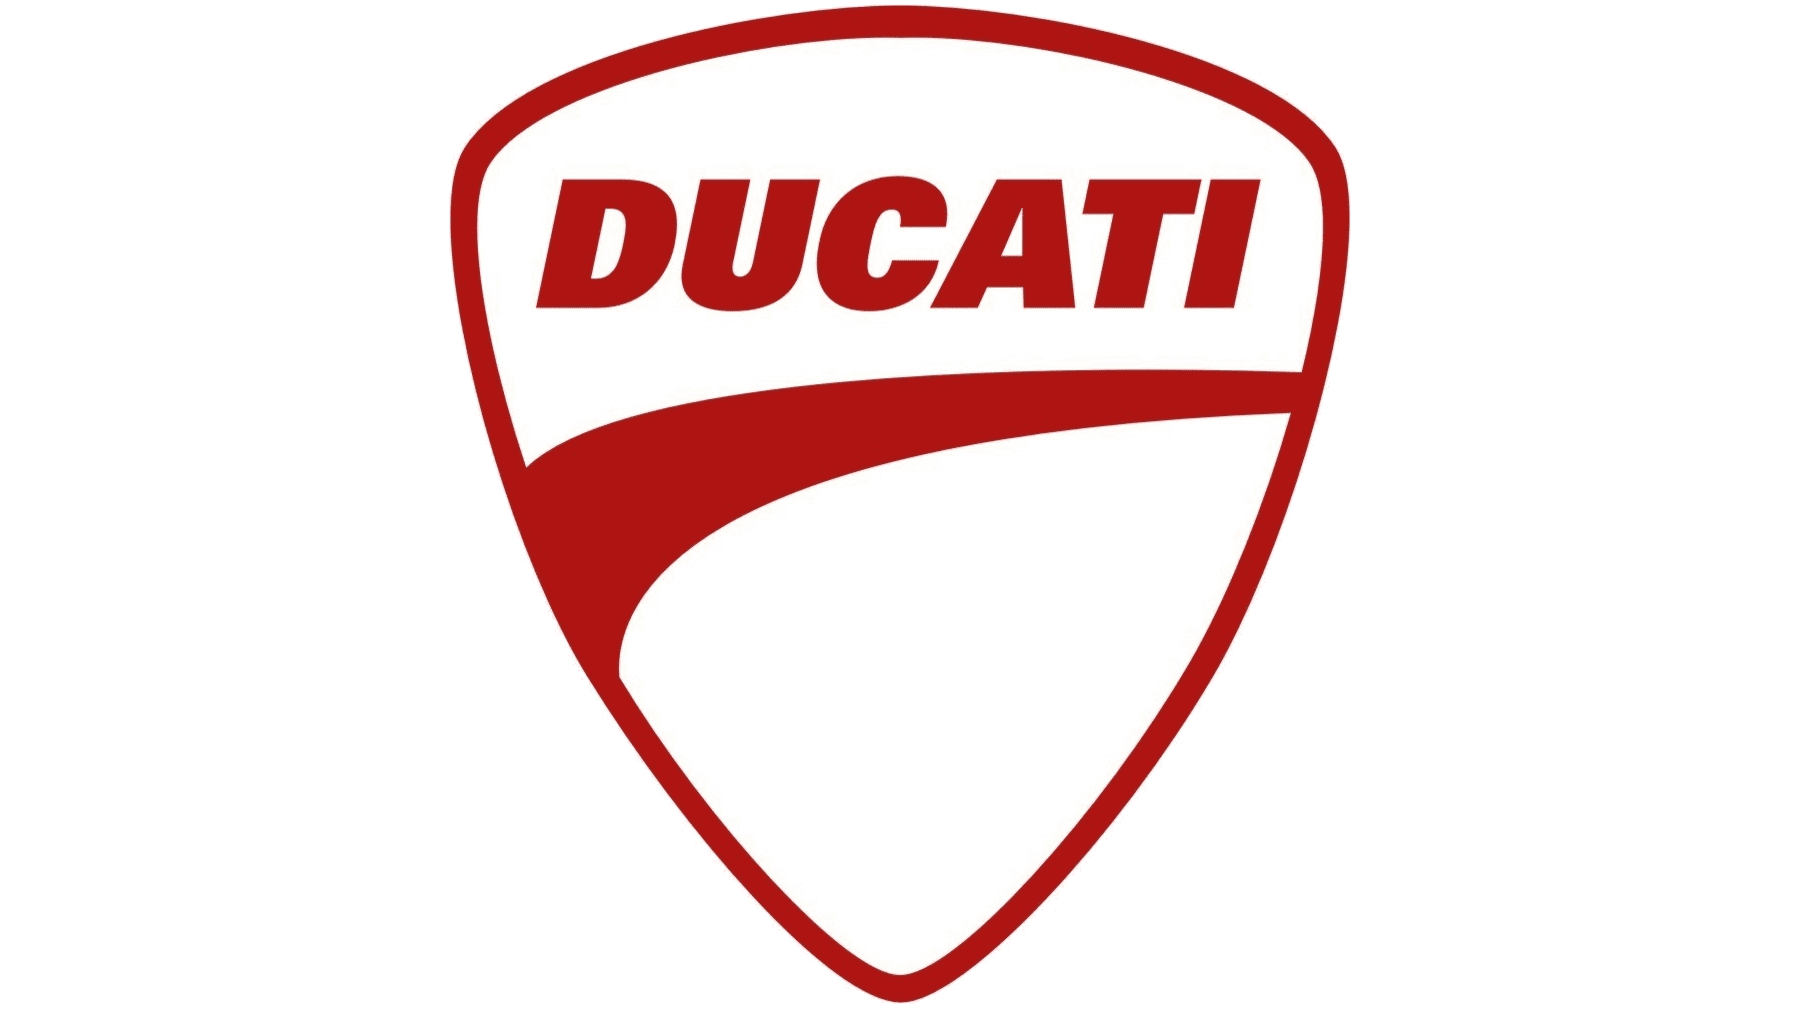 ducati motorcycle logo hd